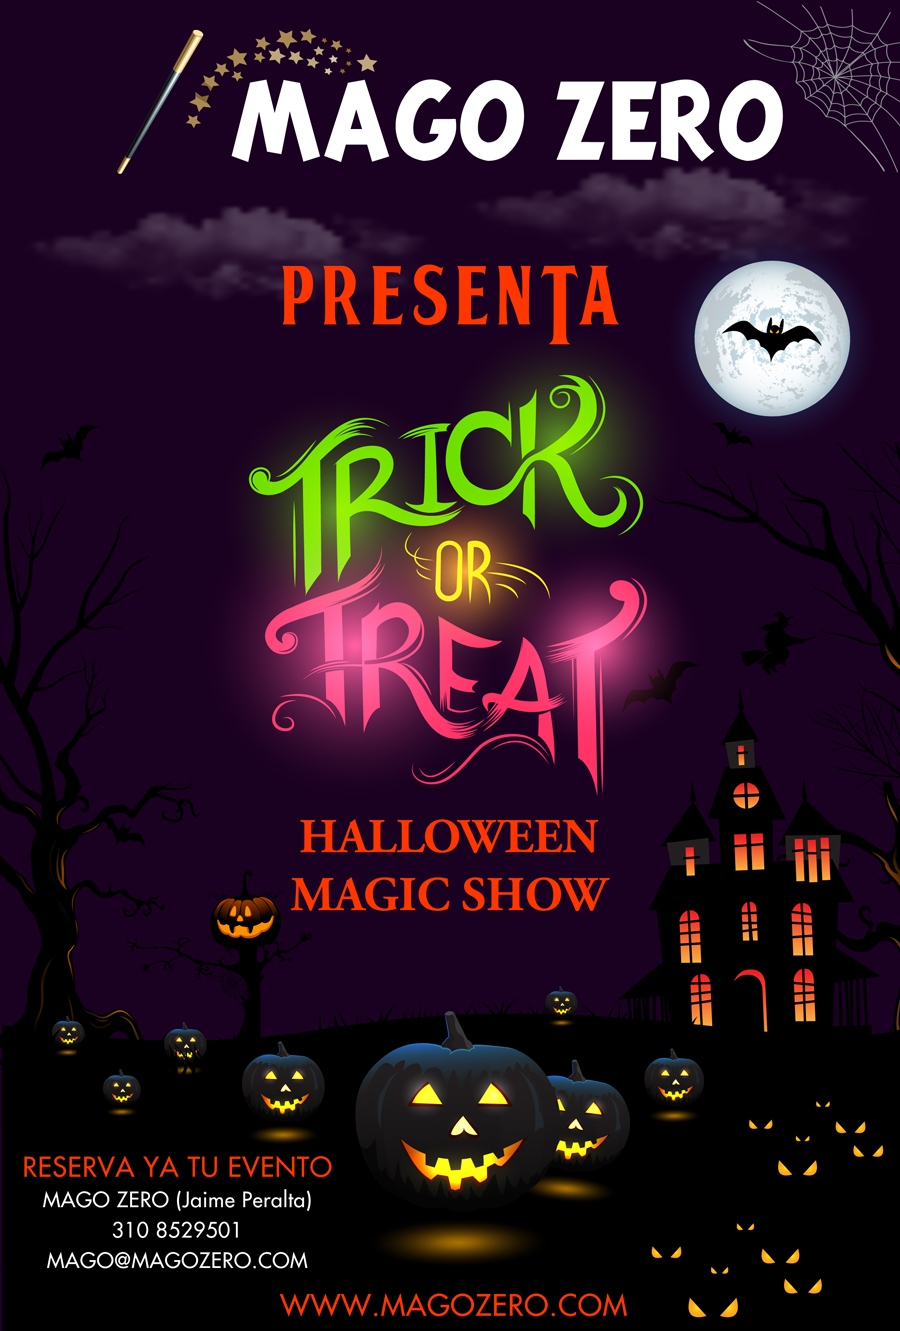 Show de magia Halloween Trick or treat 2014